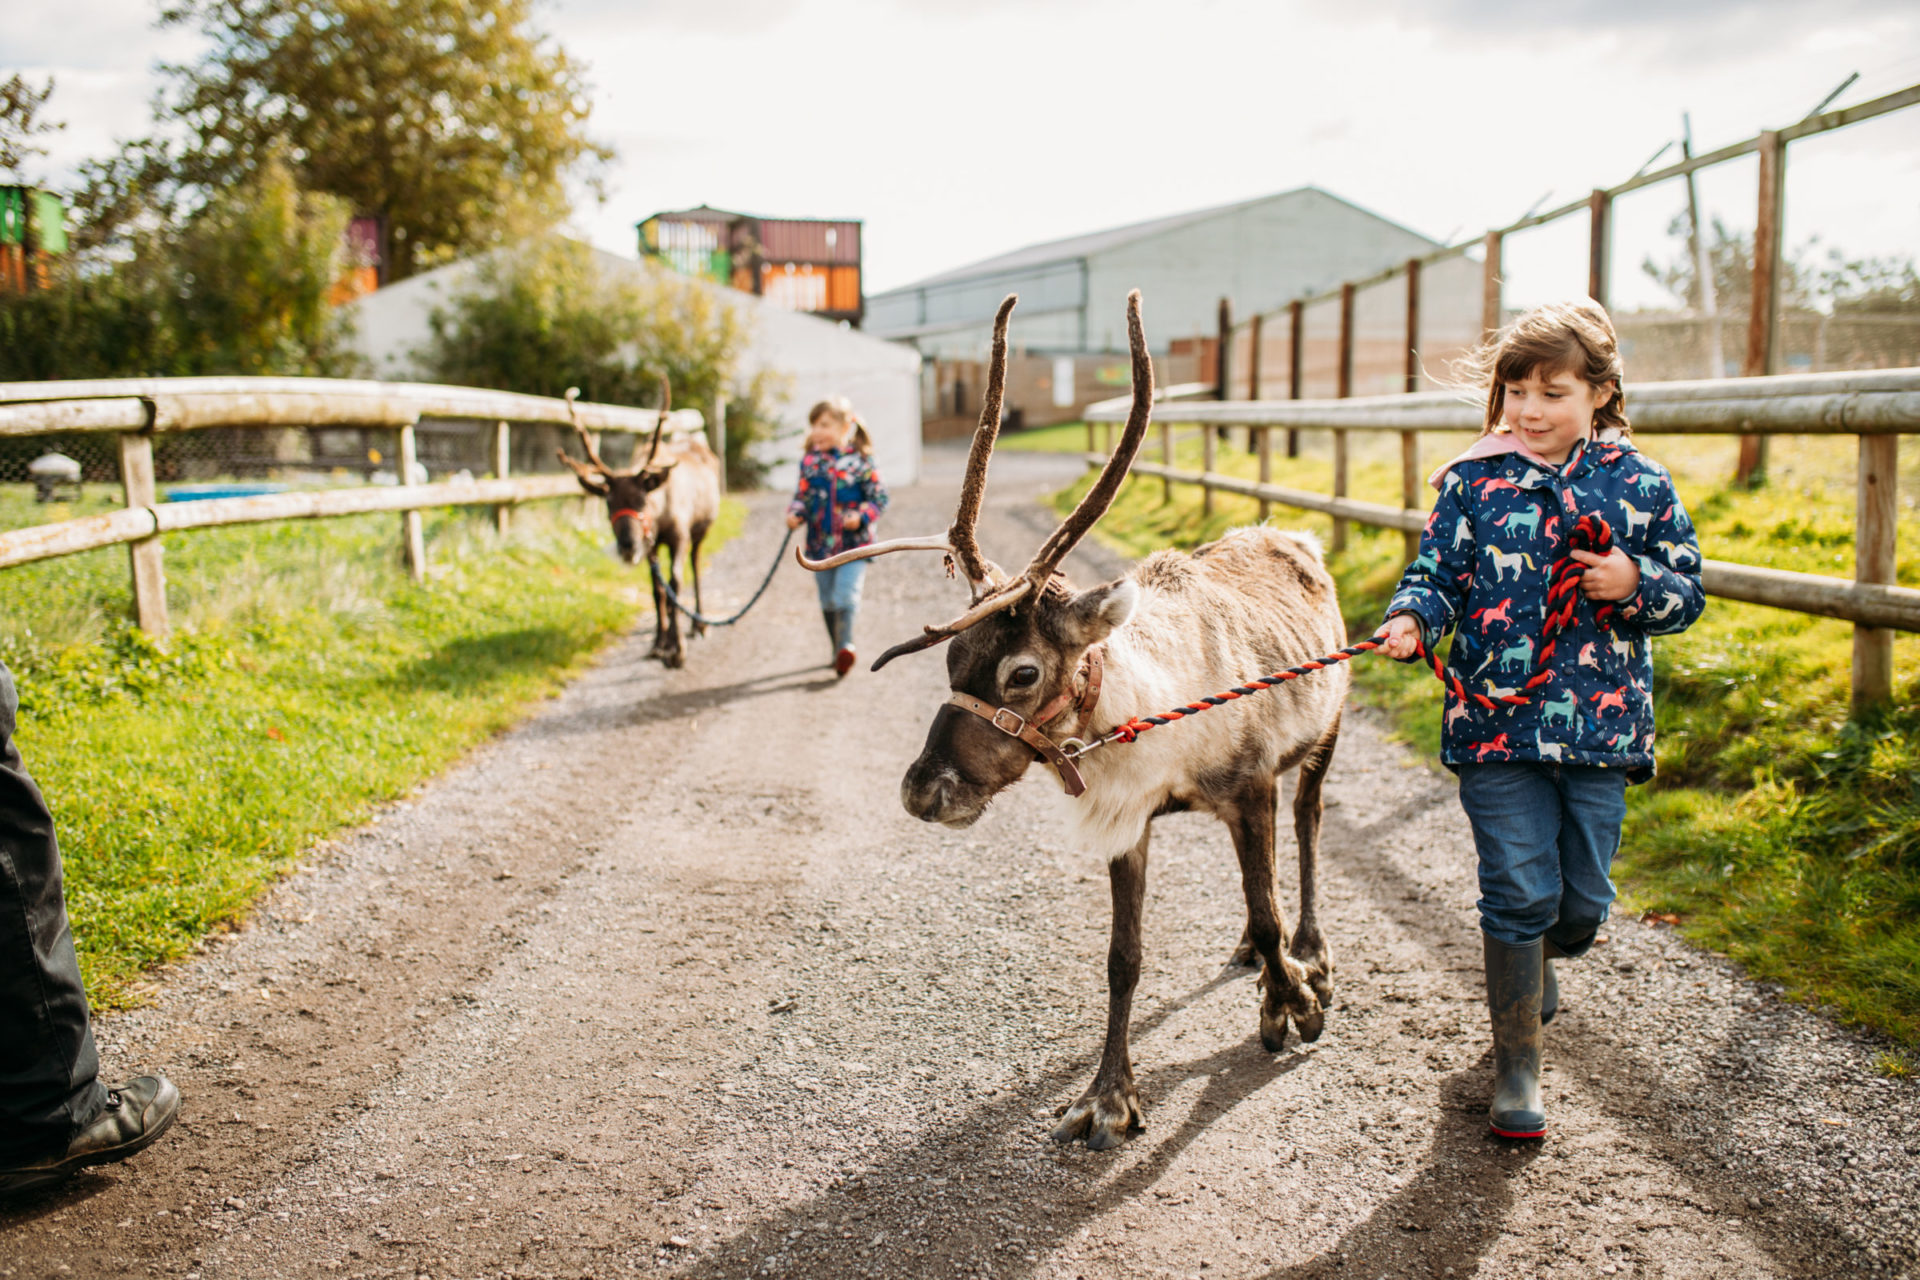 Child leading reindeer